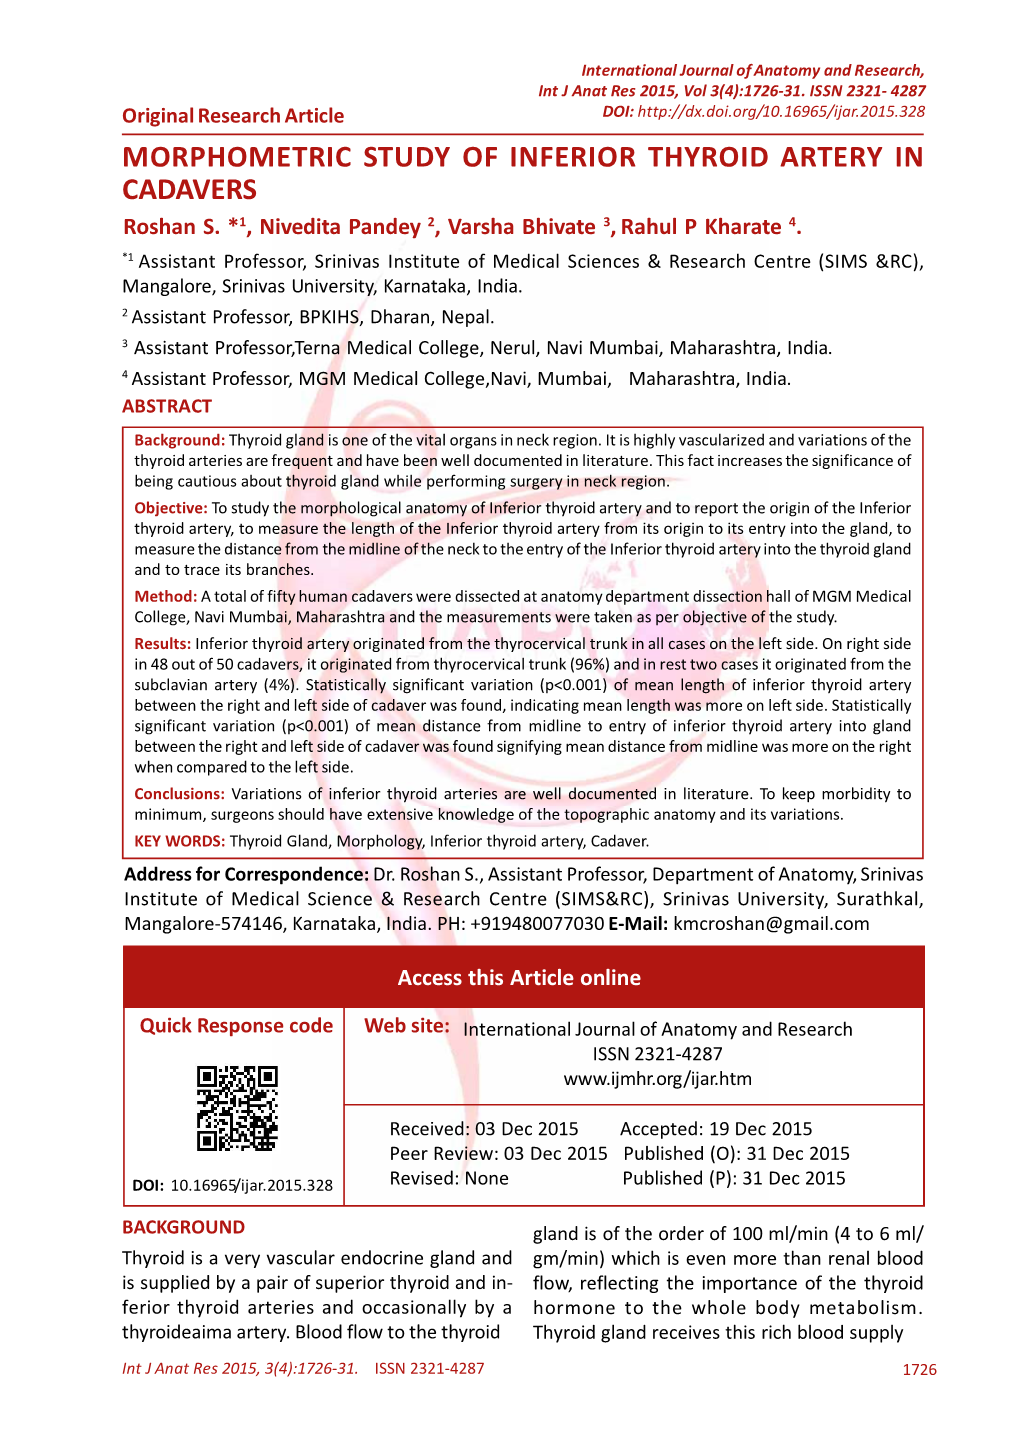 MORPHOMETRIC STUDY of INFERIOR THYROID ARTERY in CADAVERS Roshan S